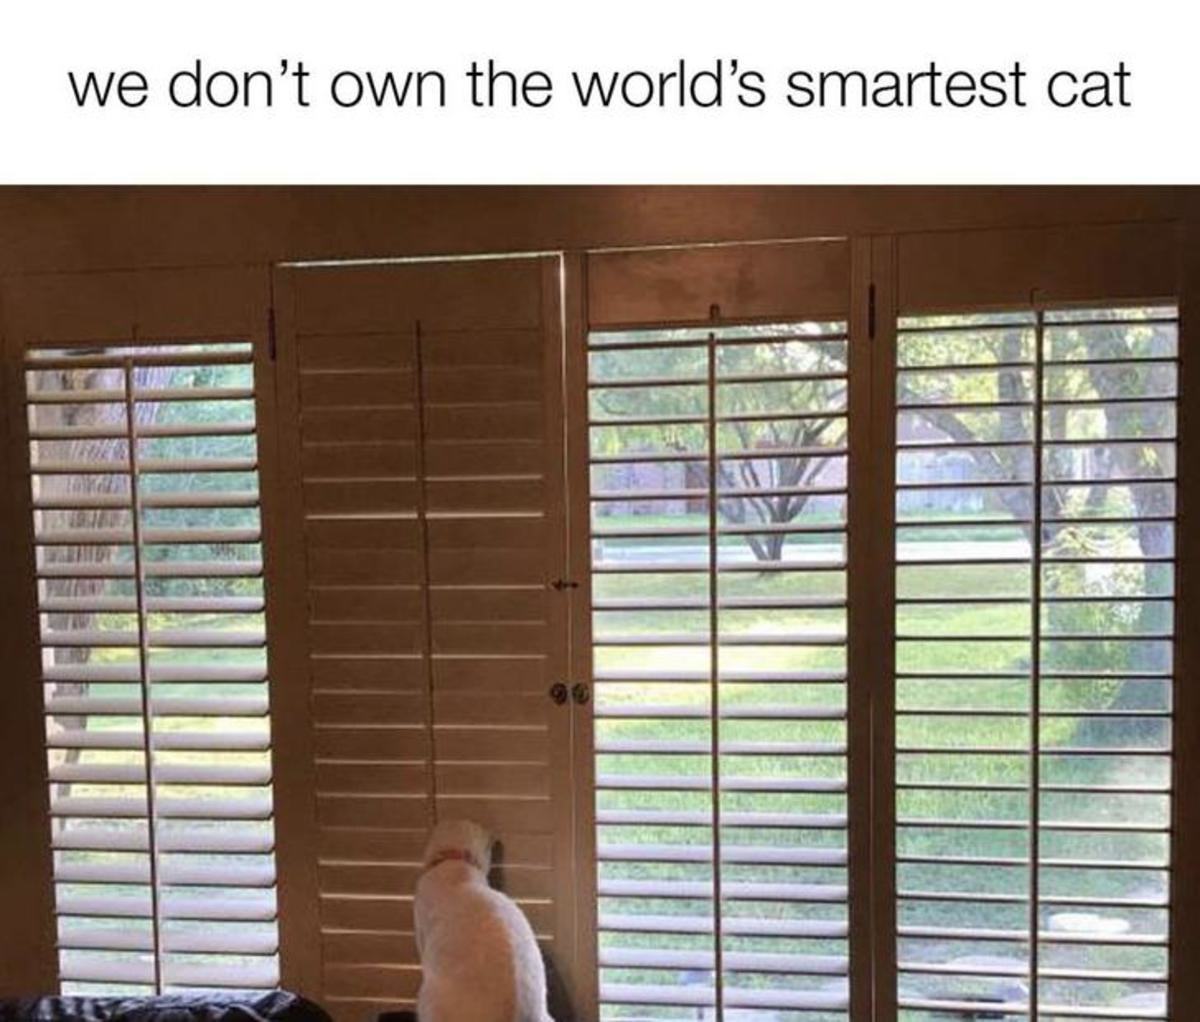 Obrázek not the smartest cat